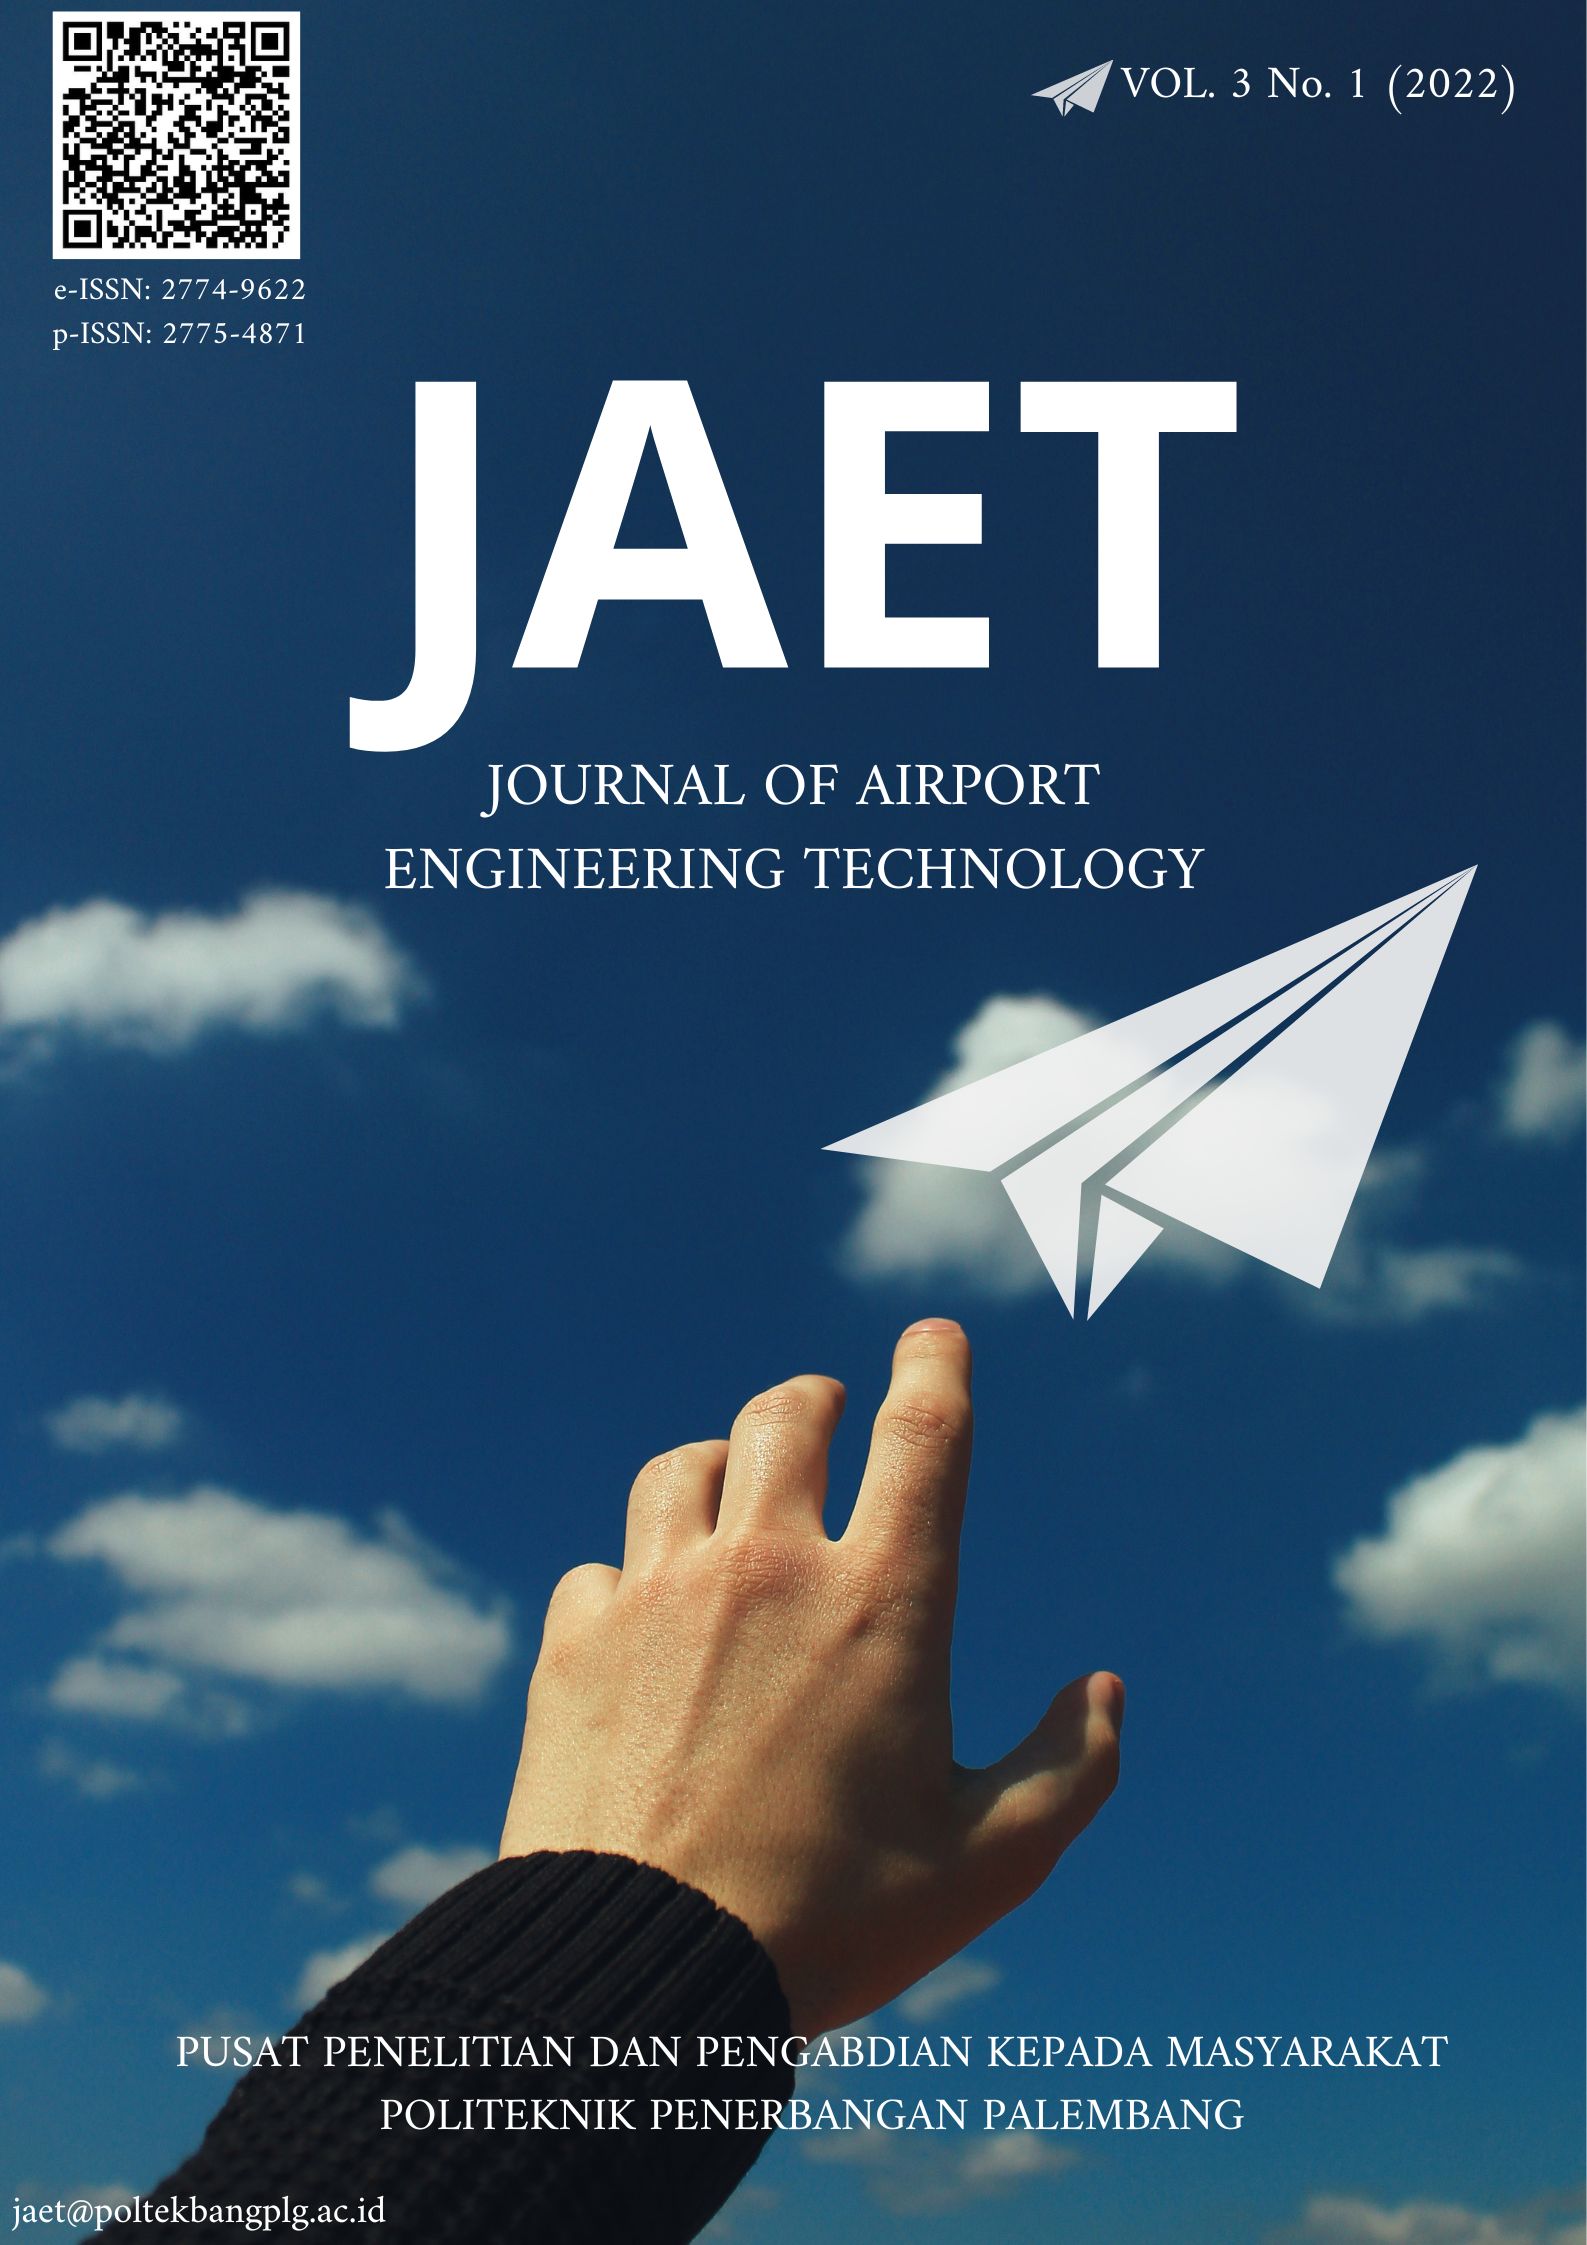 					Lihat Vol 3 No 1 (2022): Journal of Airport Engineering Technology (JAET)
				